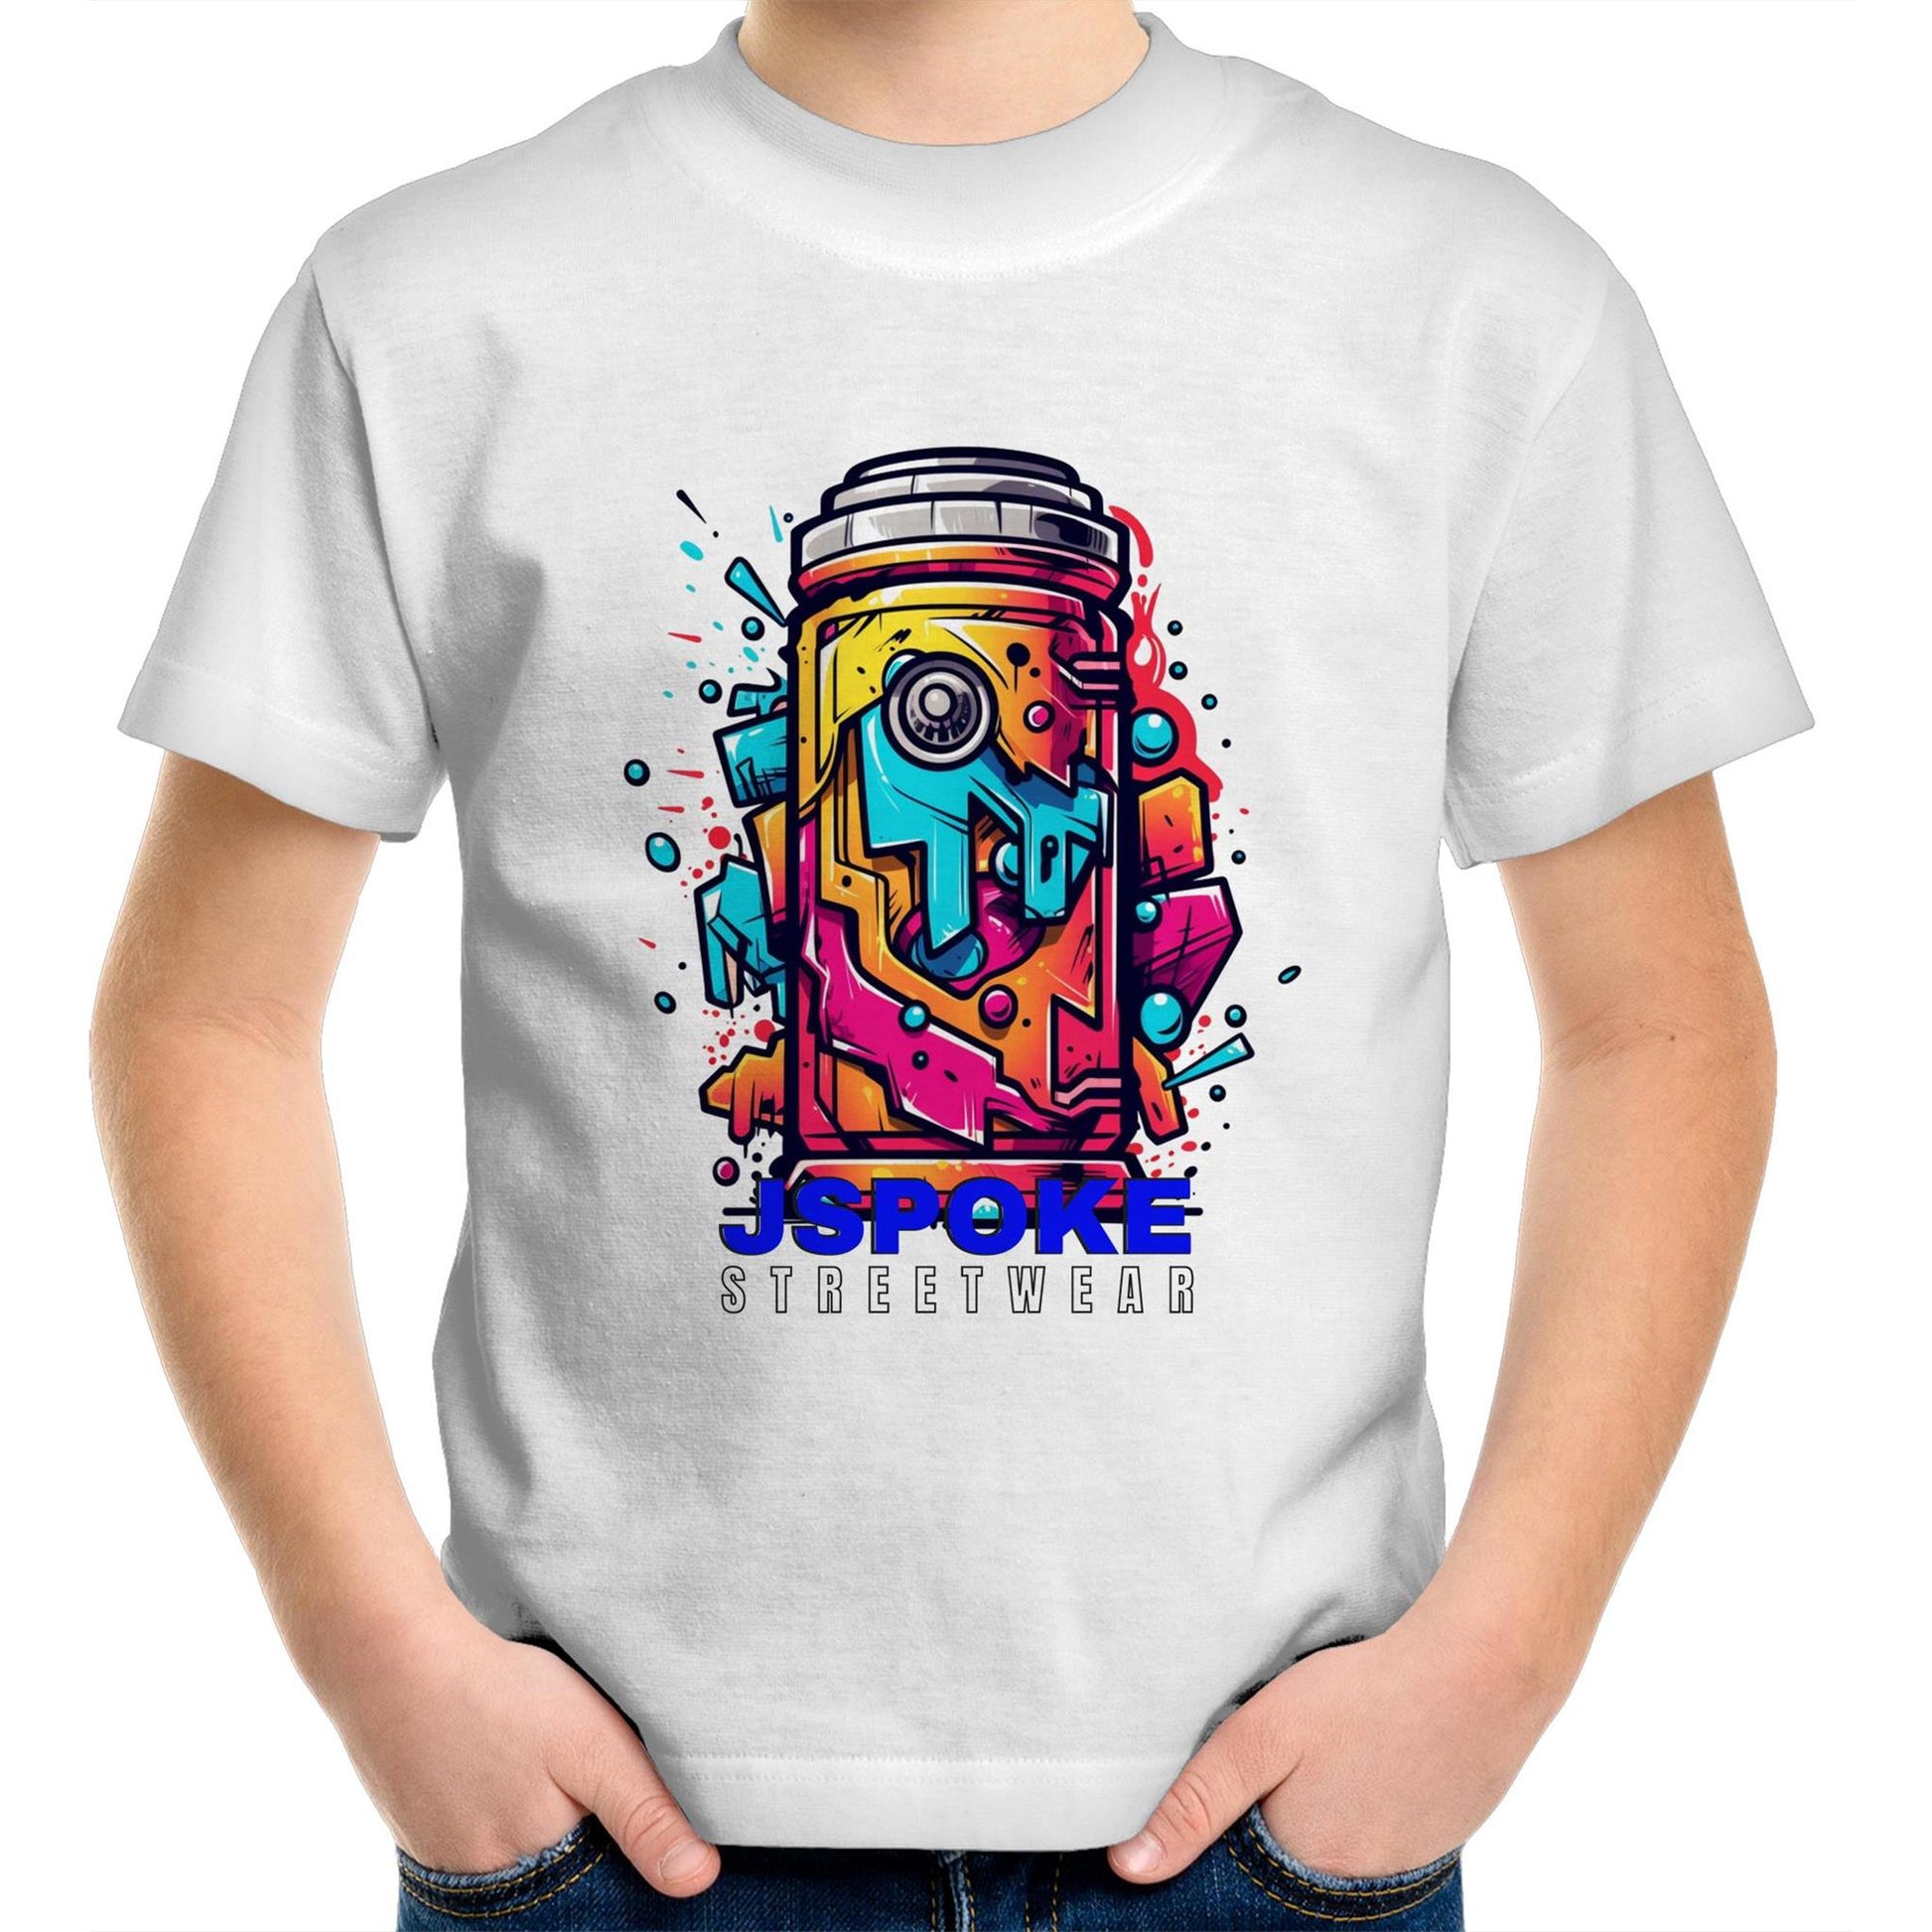 SPRAYTASTIC II - Kids Youth T-Shirt - JSPOKE